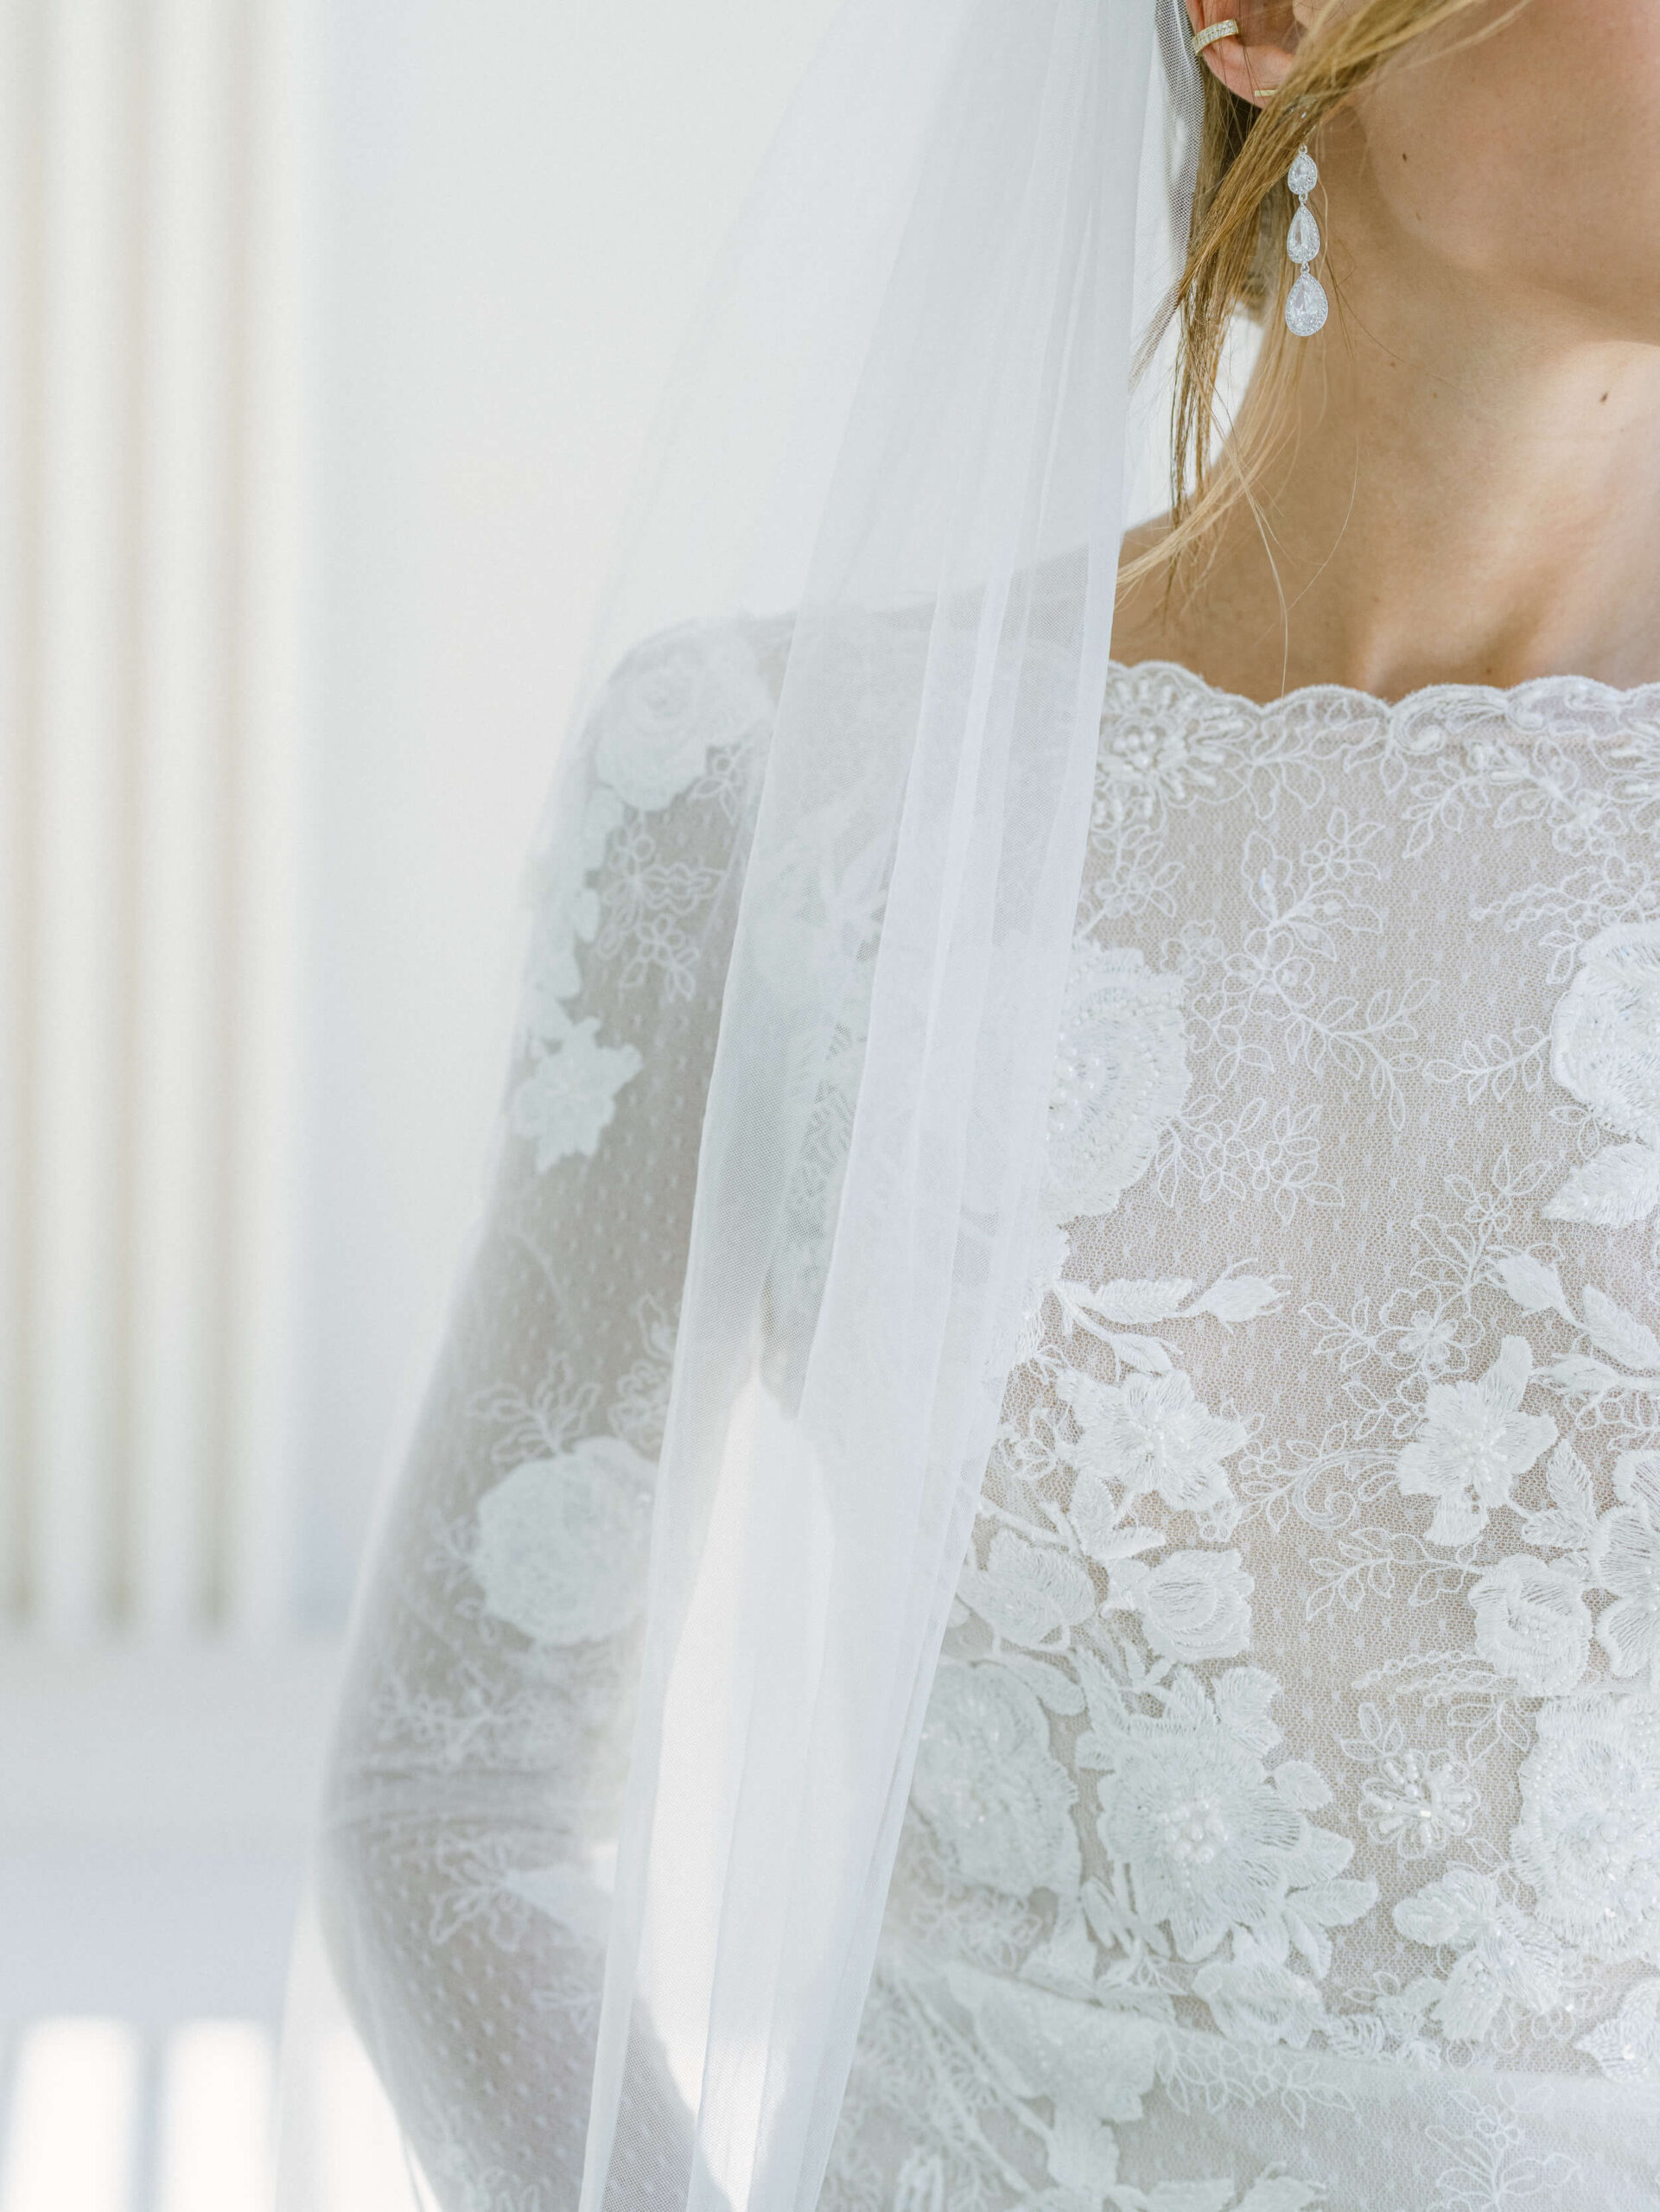 Closeup of Olga's wedding dress and earrings